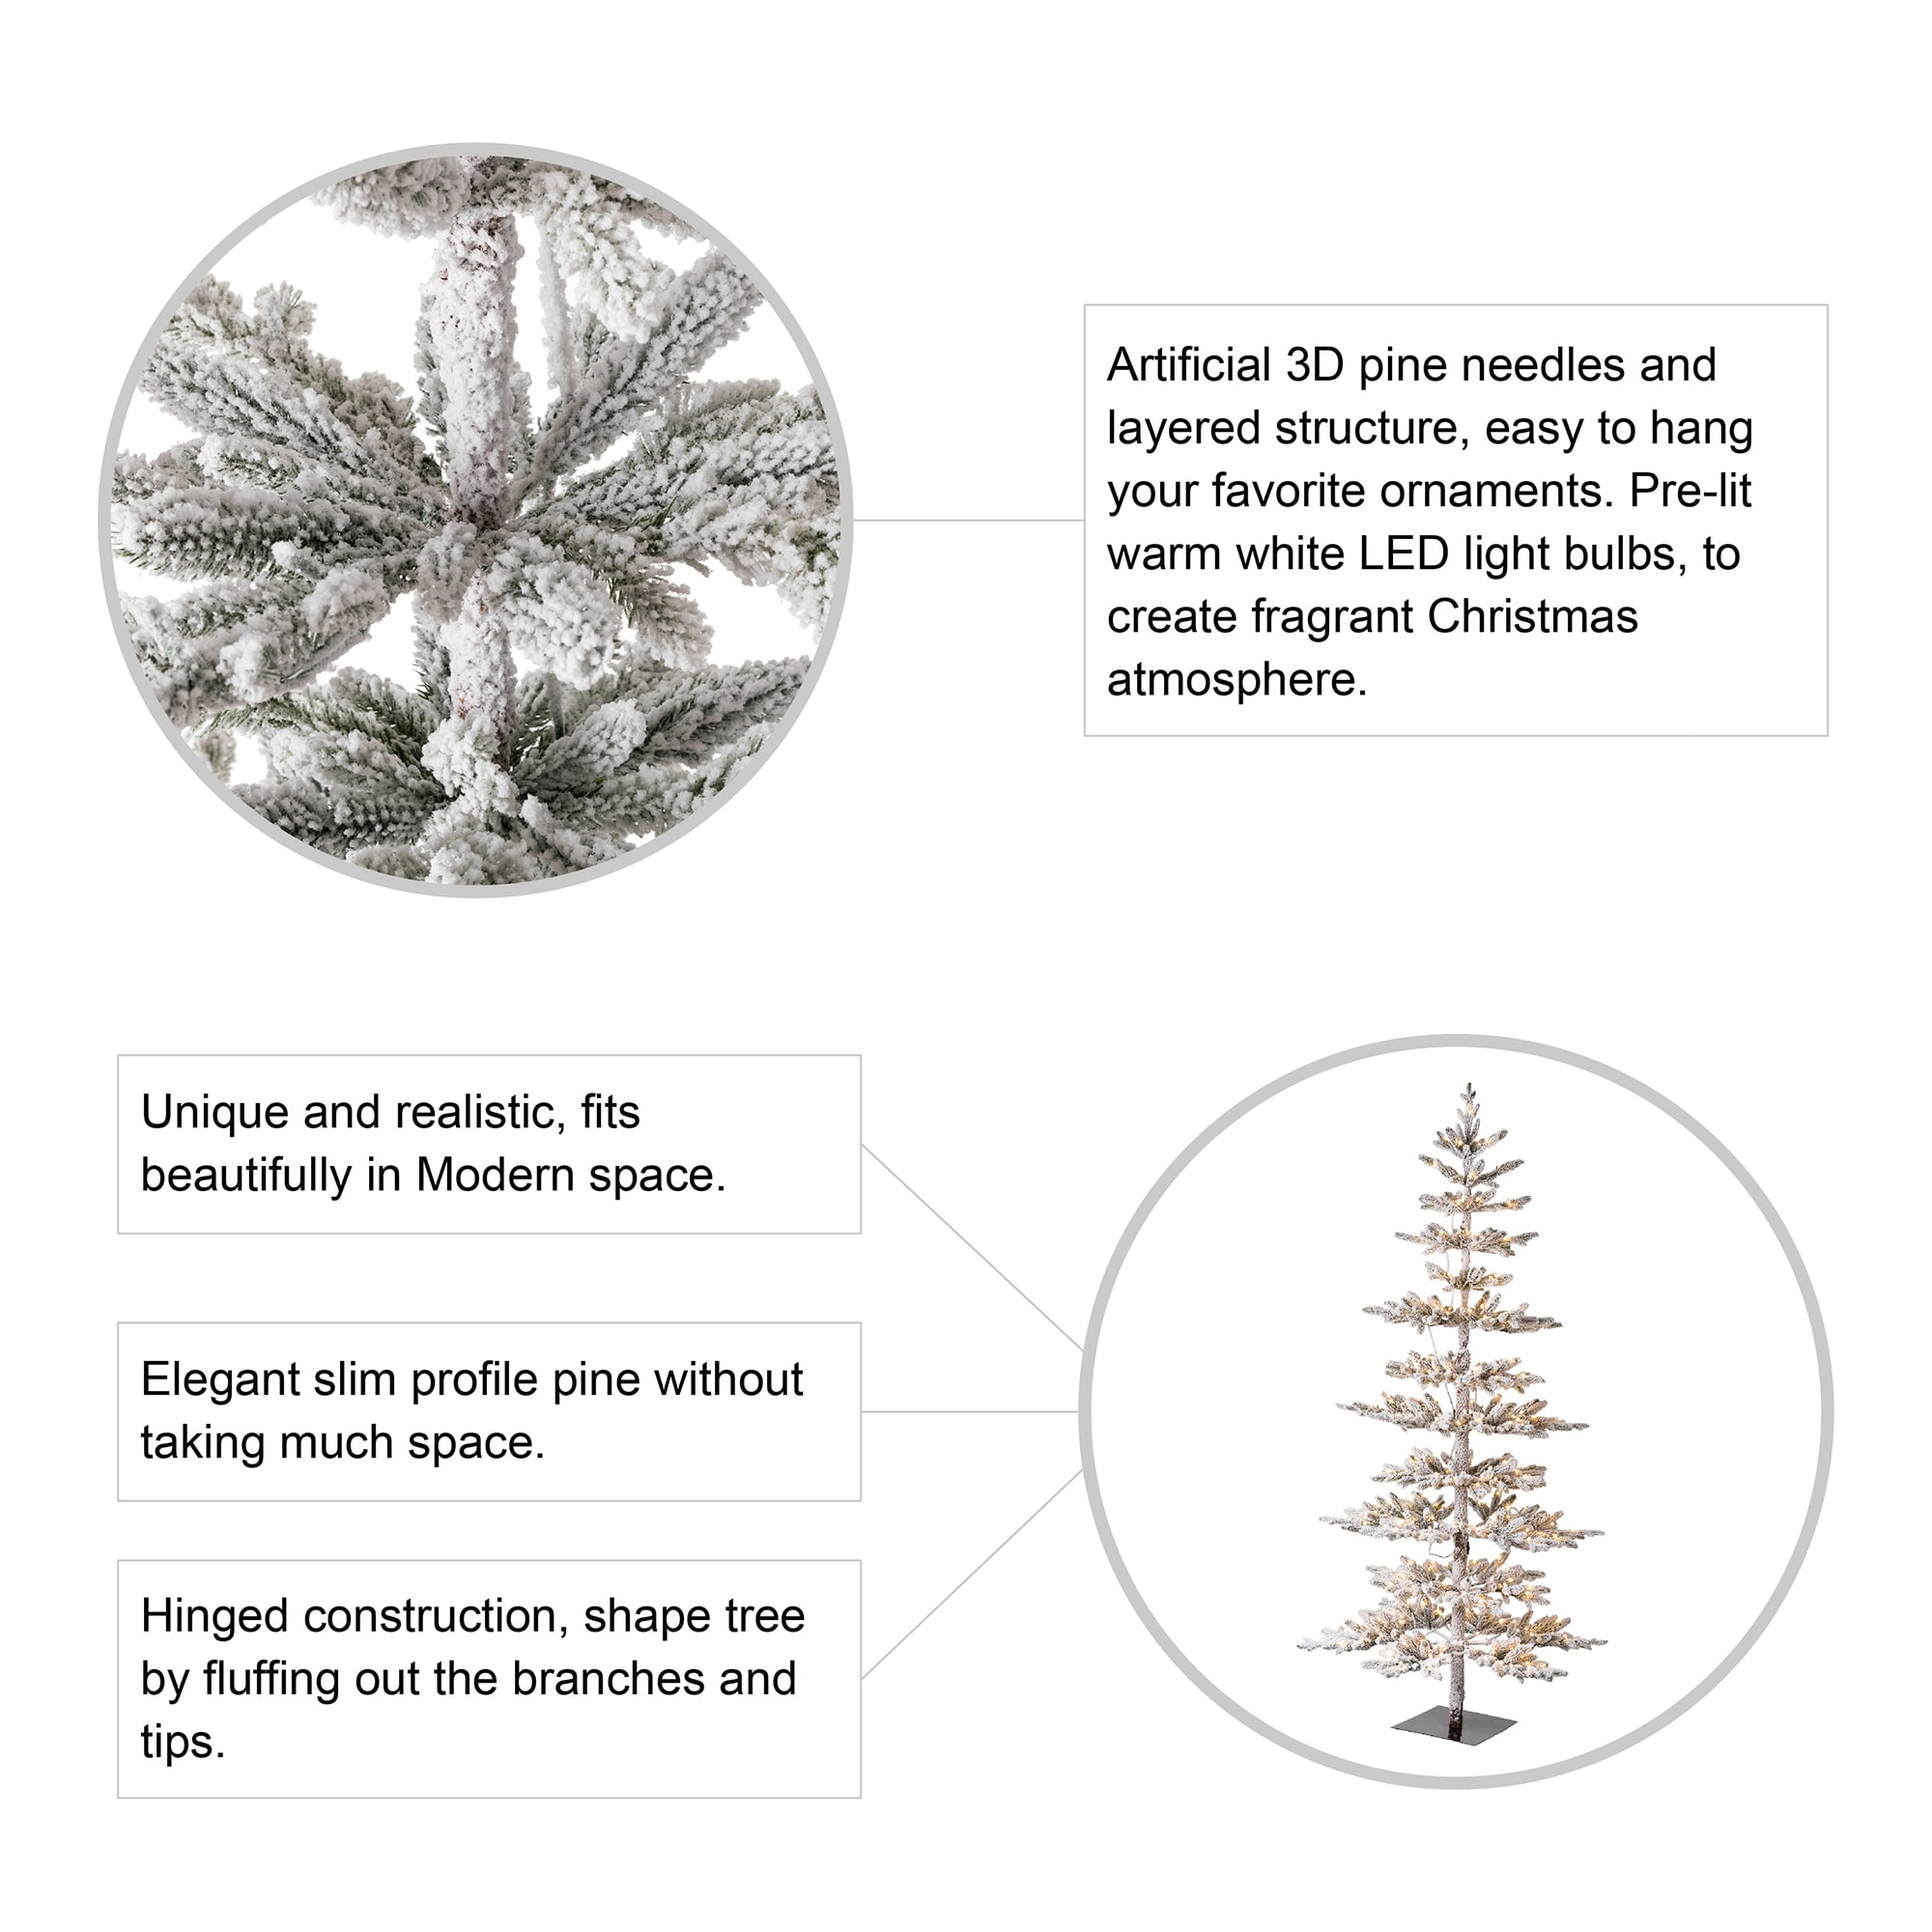 Glitzhome 8ft/10ft Pre-Lit Deluxe White Pine Slim Christmas Tree